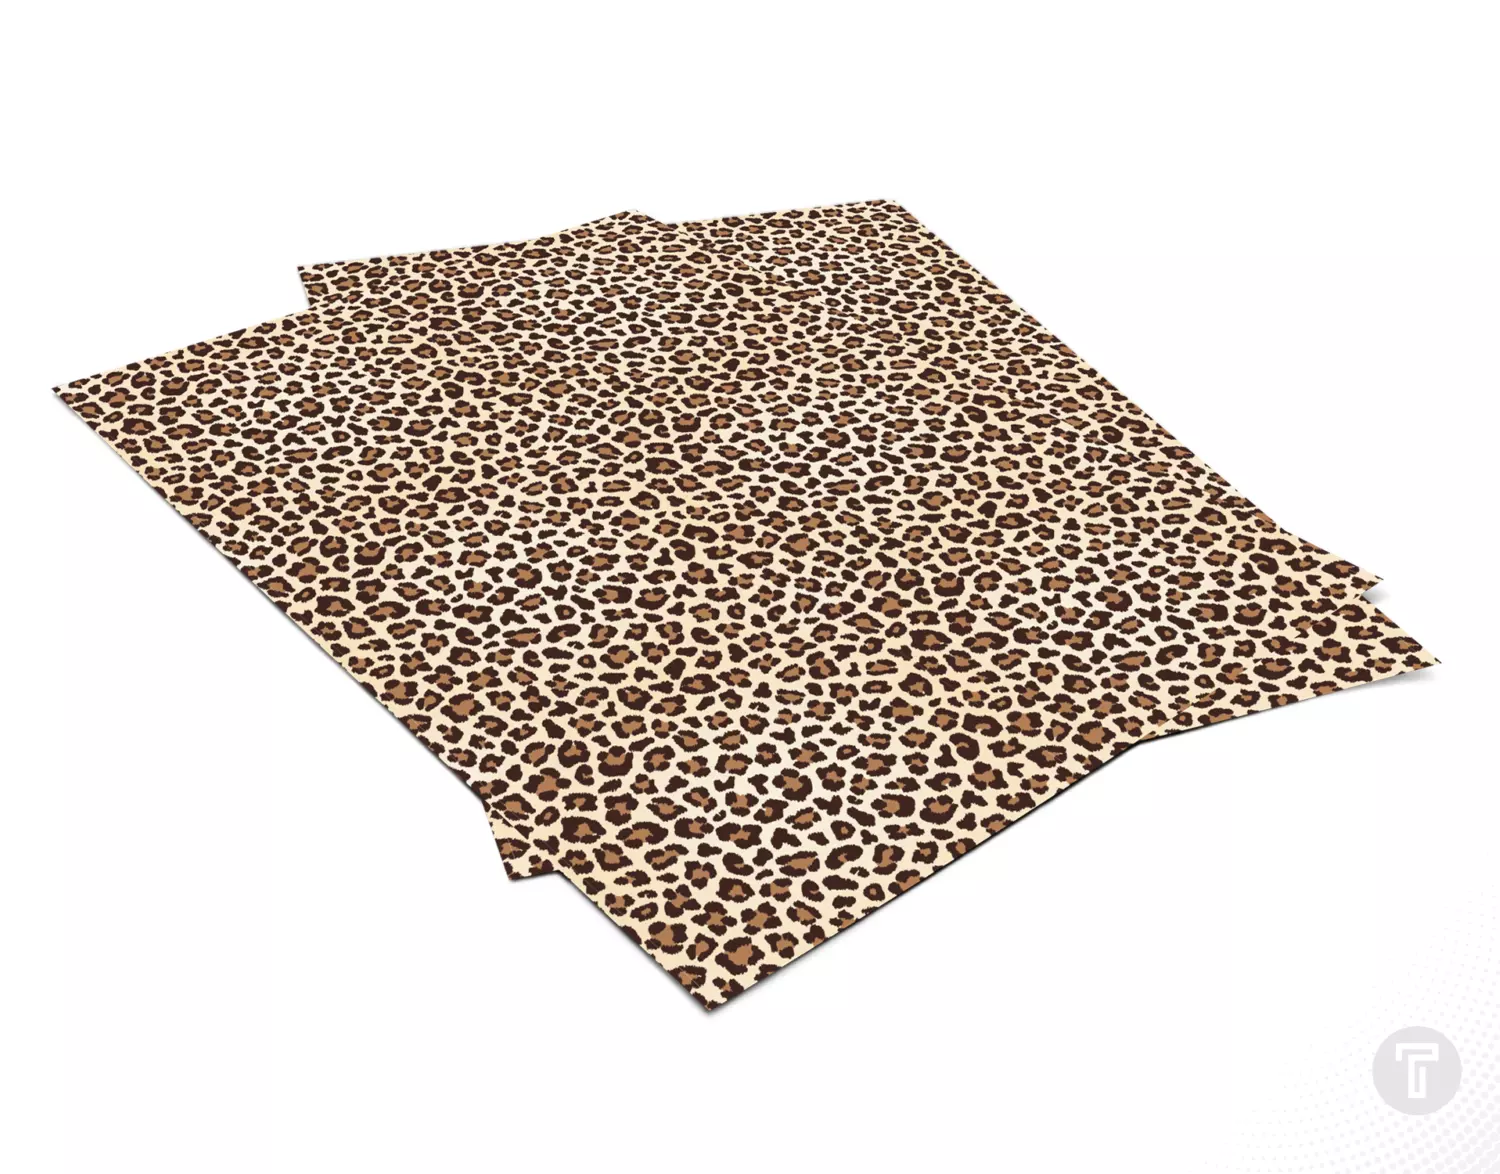 Tps patterns vinyl leopard